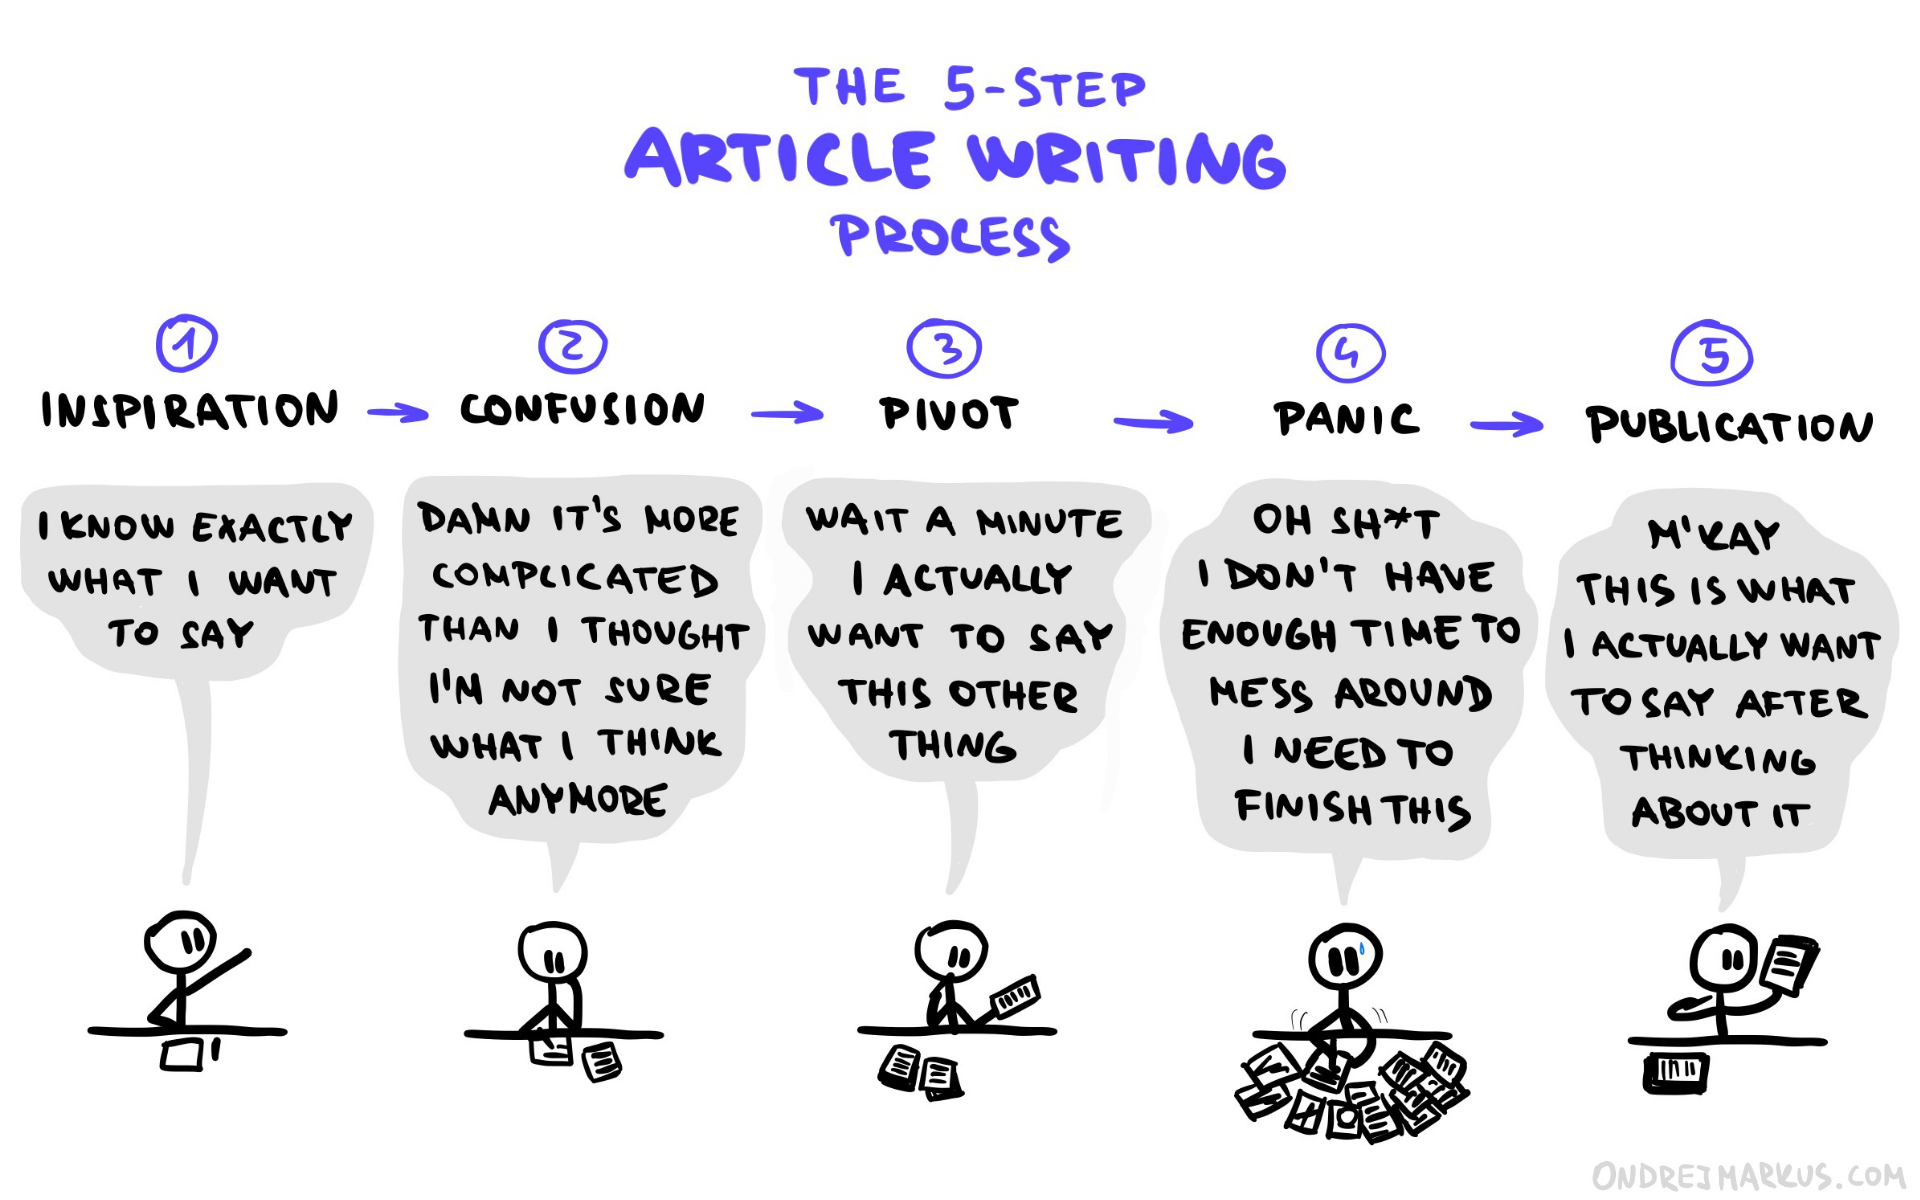 My 5-step article writing process